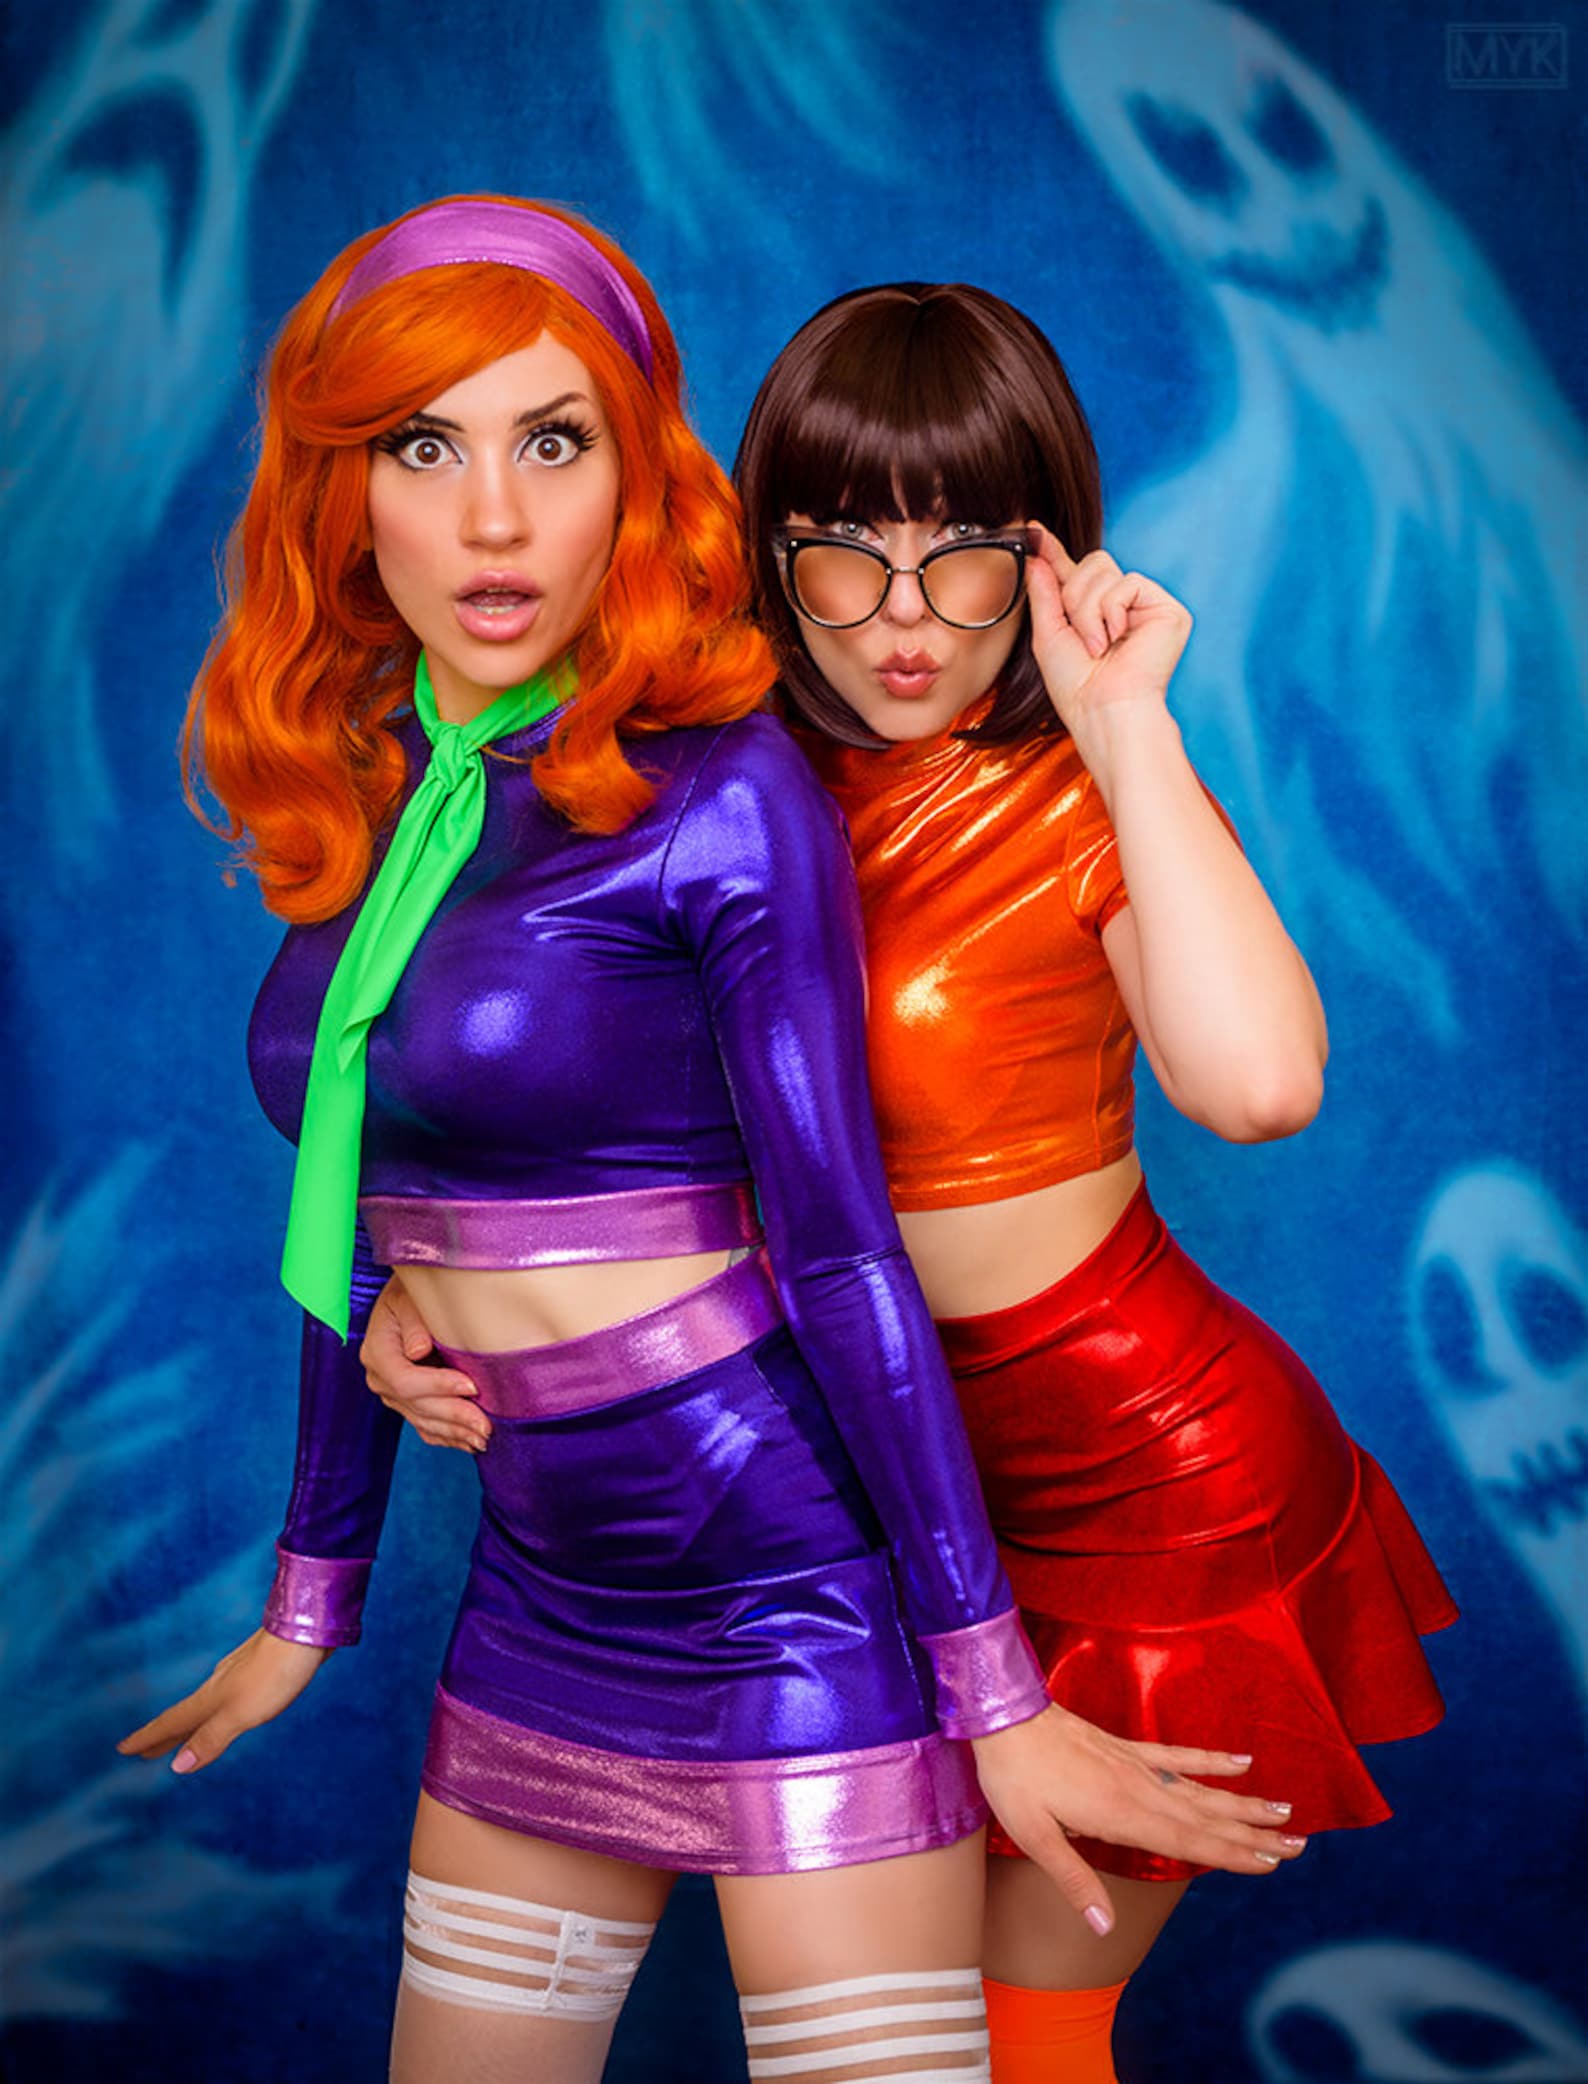 Daphne & Velma Halloween costumes for best friends